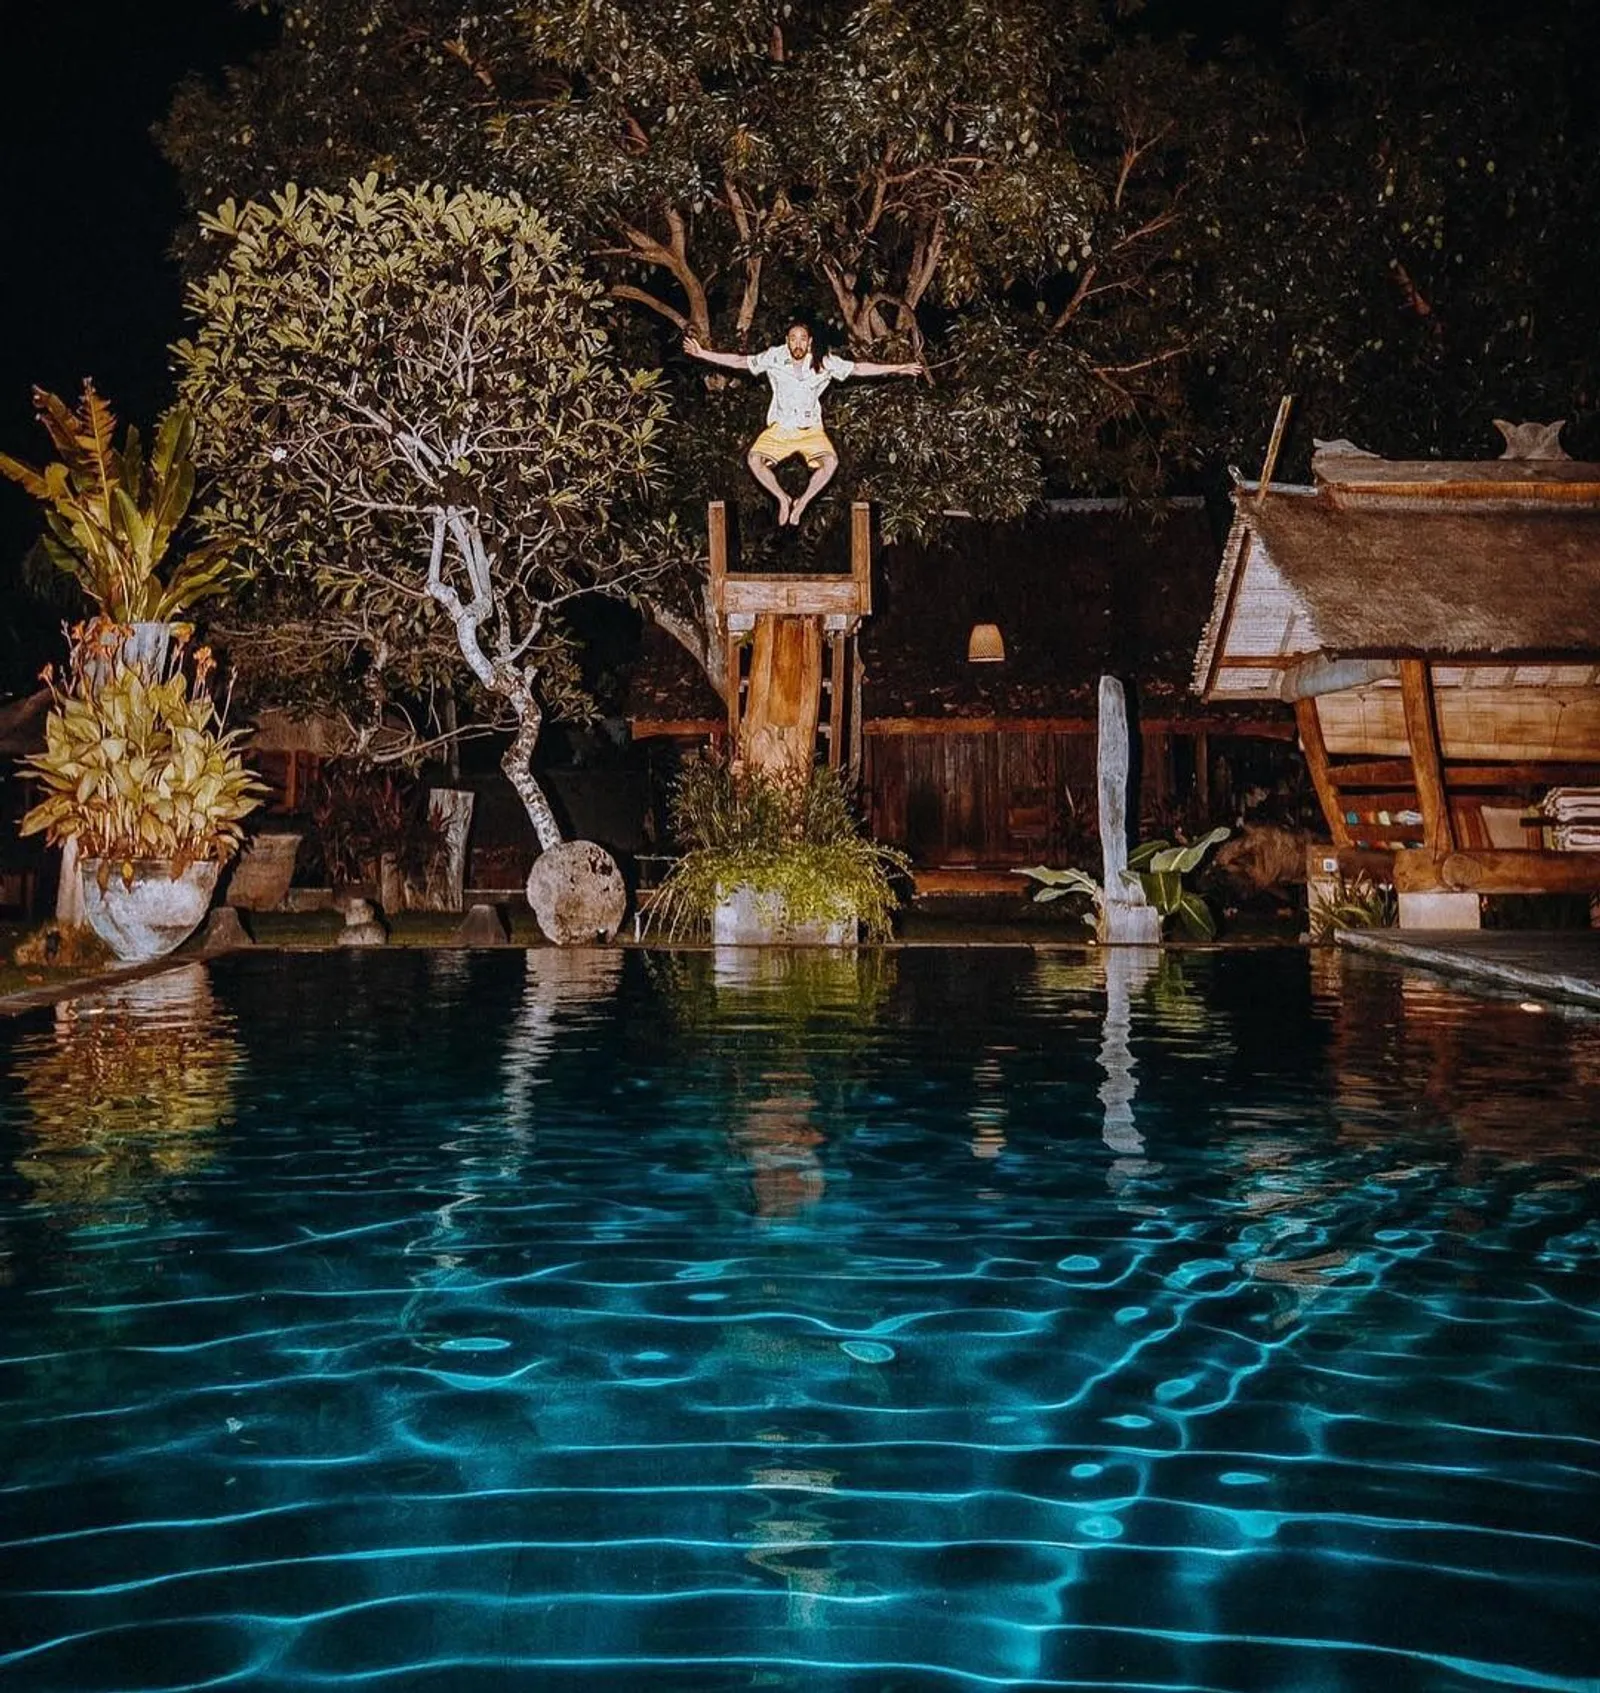 Hebohnya Steve Aoki di Bali, Kibar Bendera Indonesia Hingga Naik Ojek